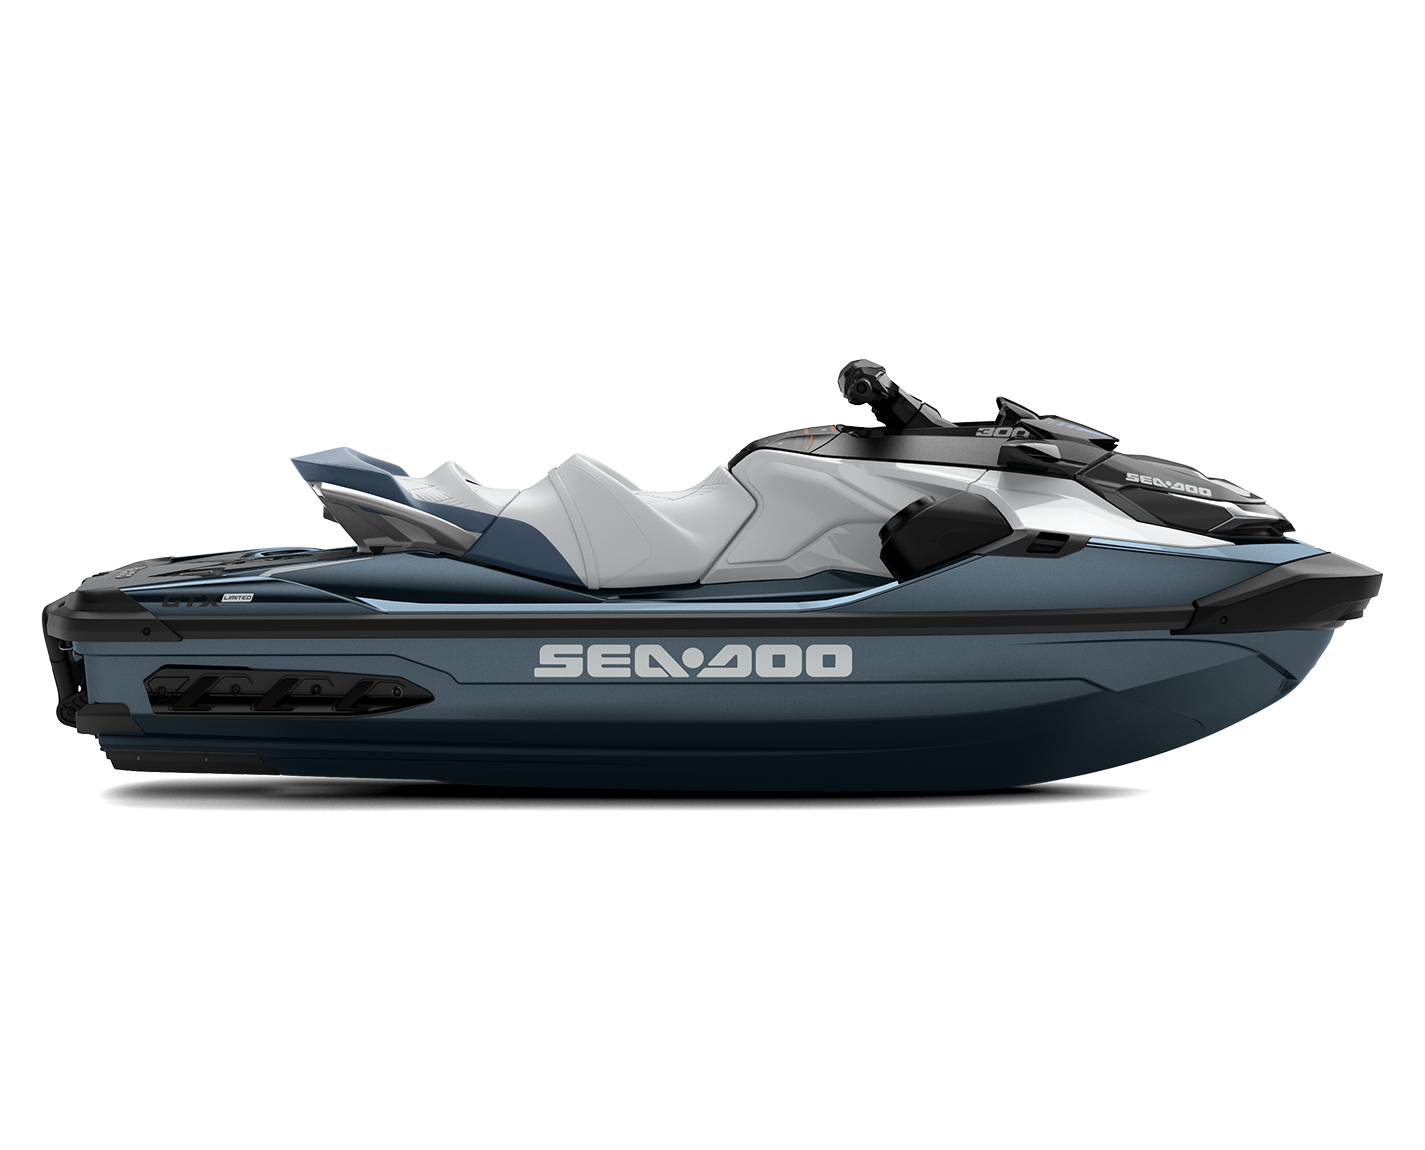 2023 Sea-doo GTX LIMITED Modeli